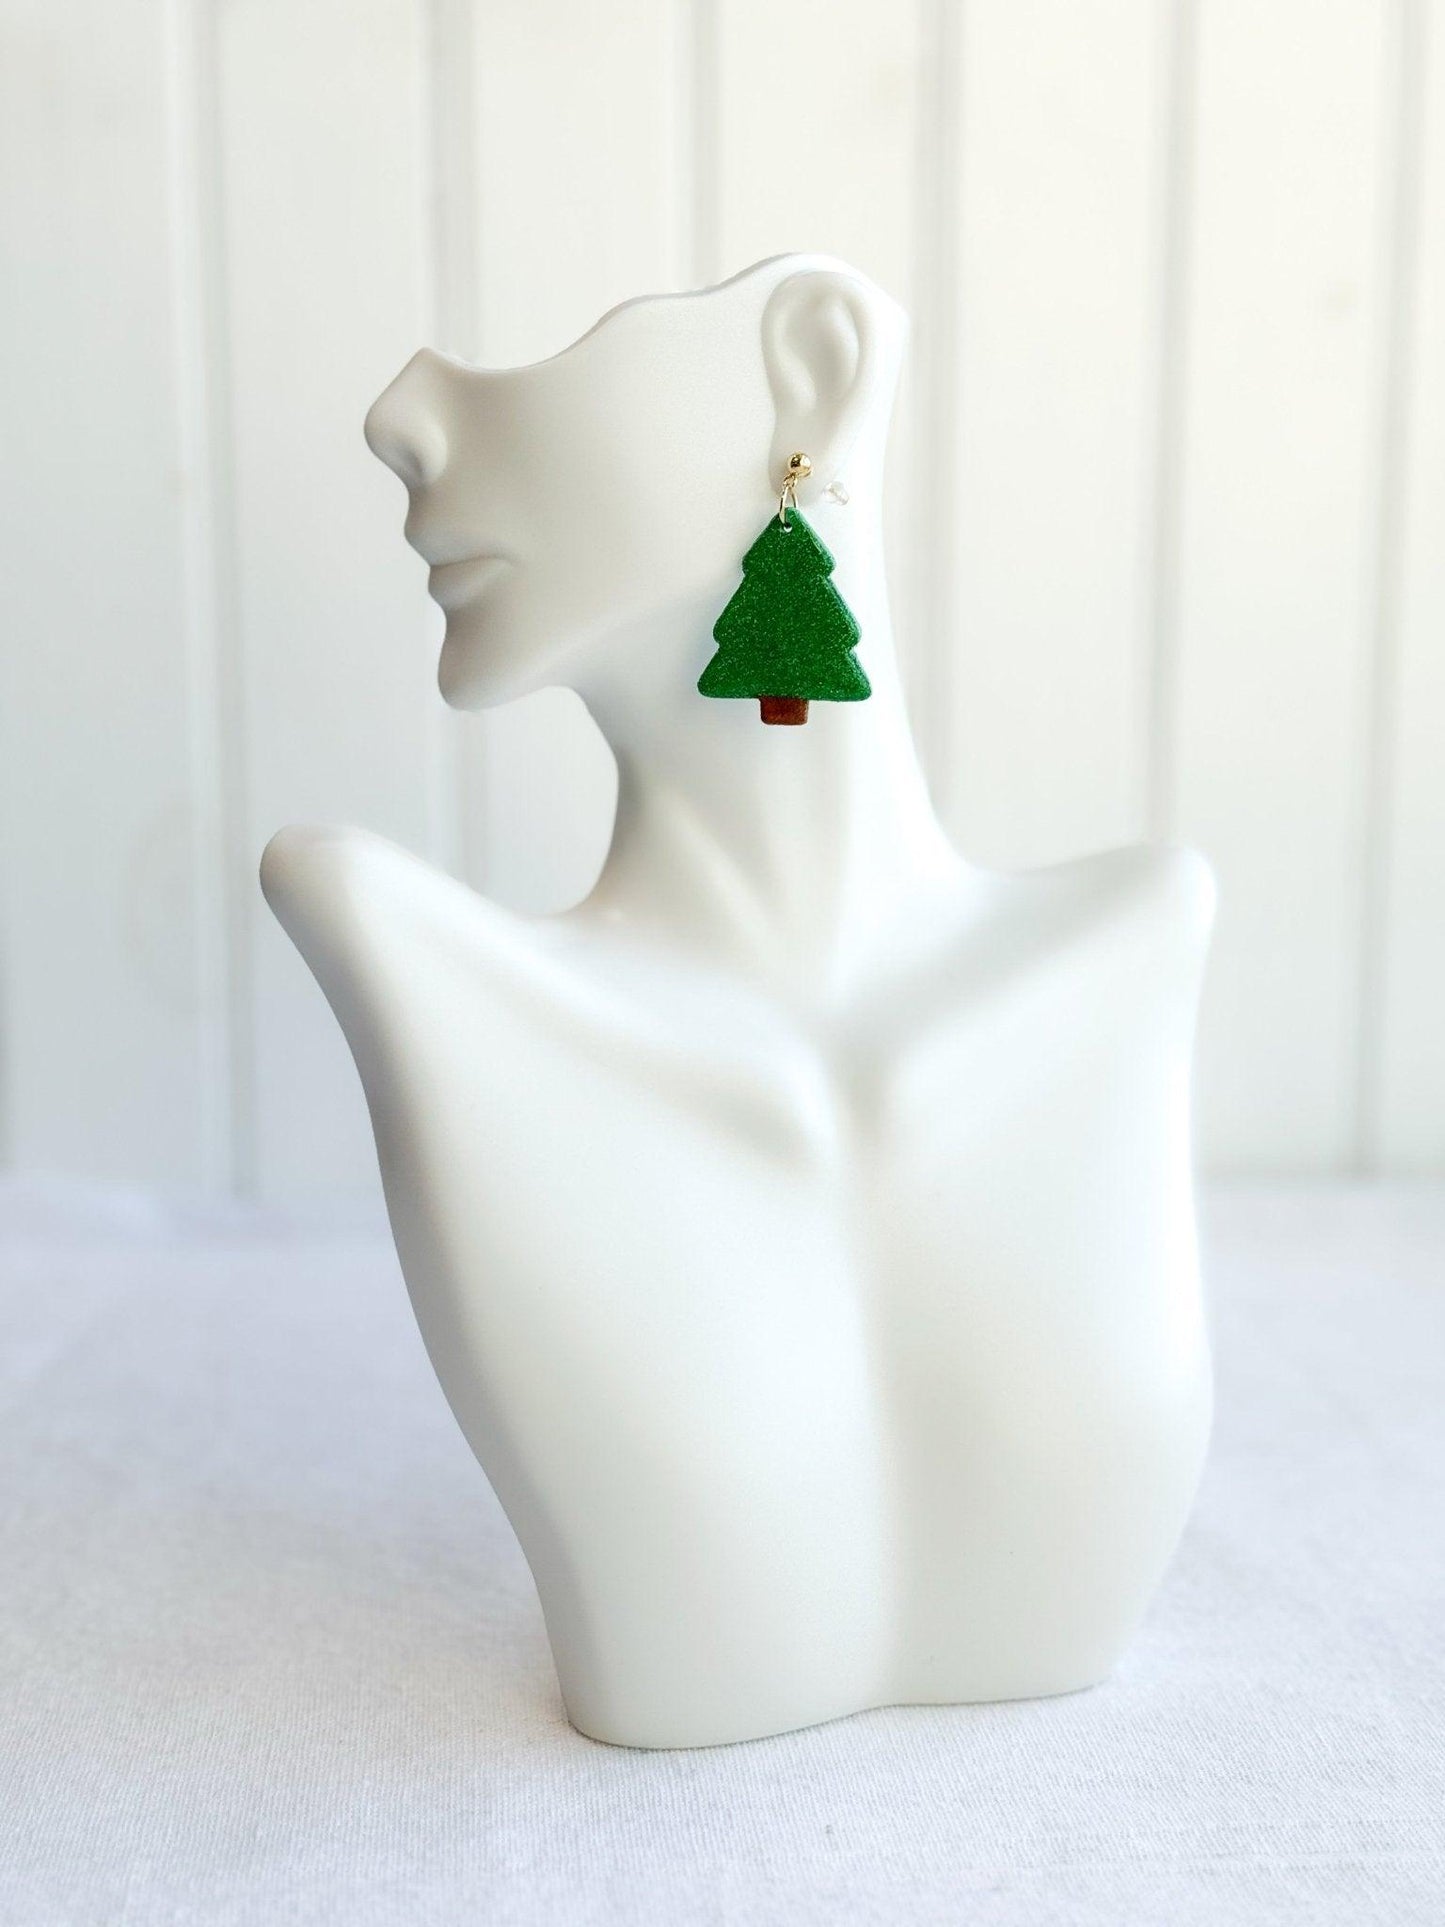 Festive Christmas Tree Earrings - Sparkly Earrings - Polymer Clay Earrings - Surgical Steel Earrings - Harbor to Gulf Co.